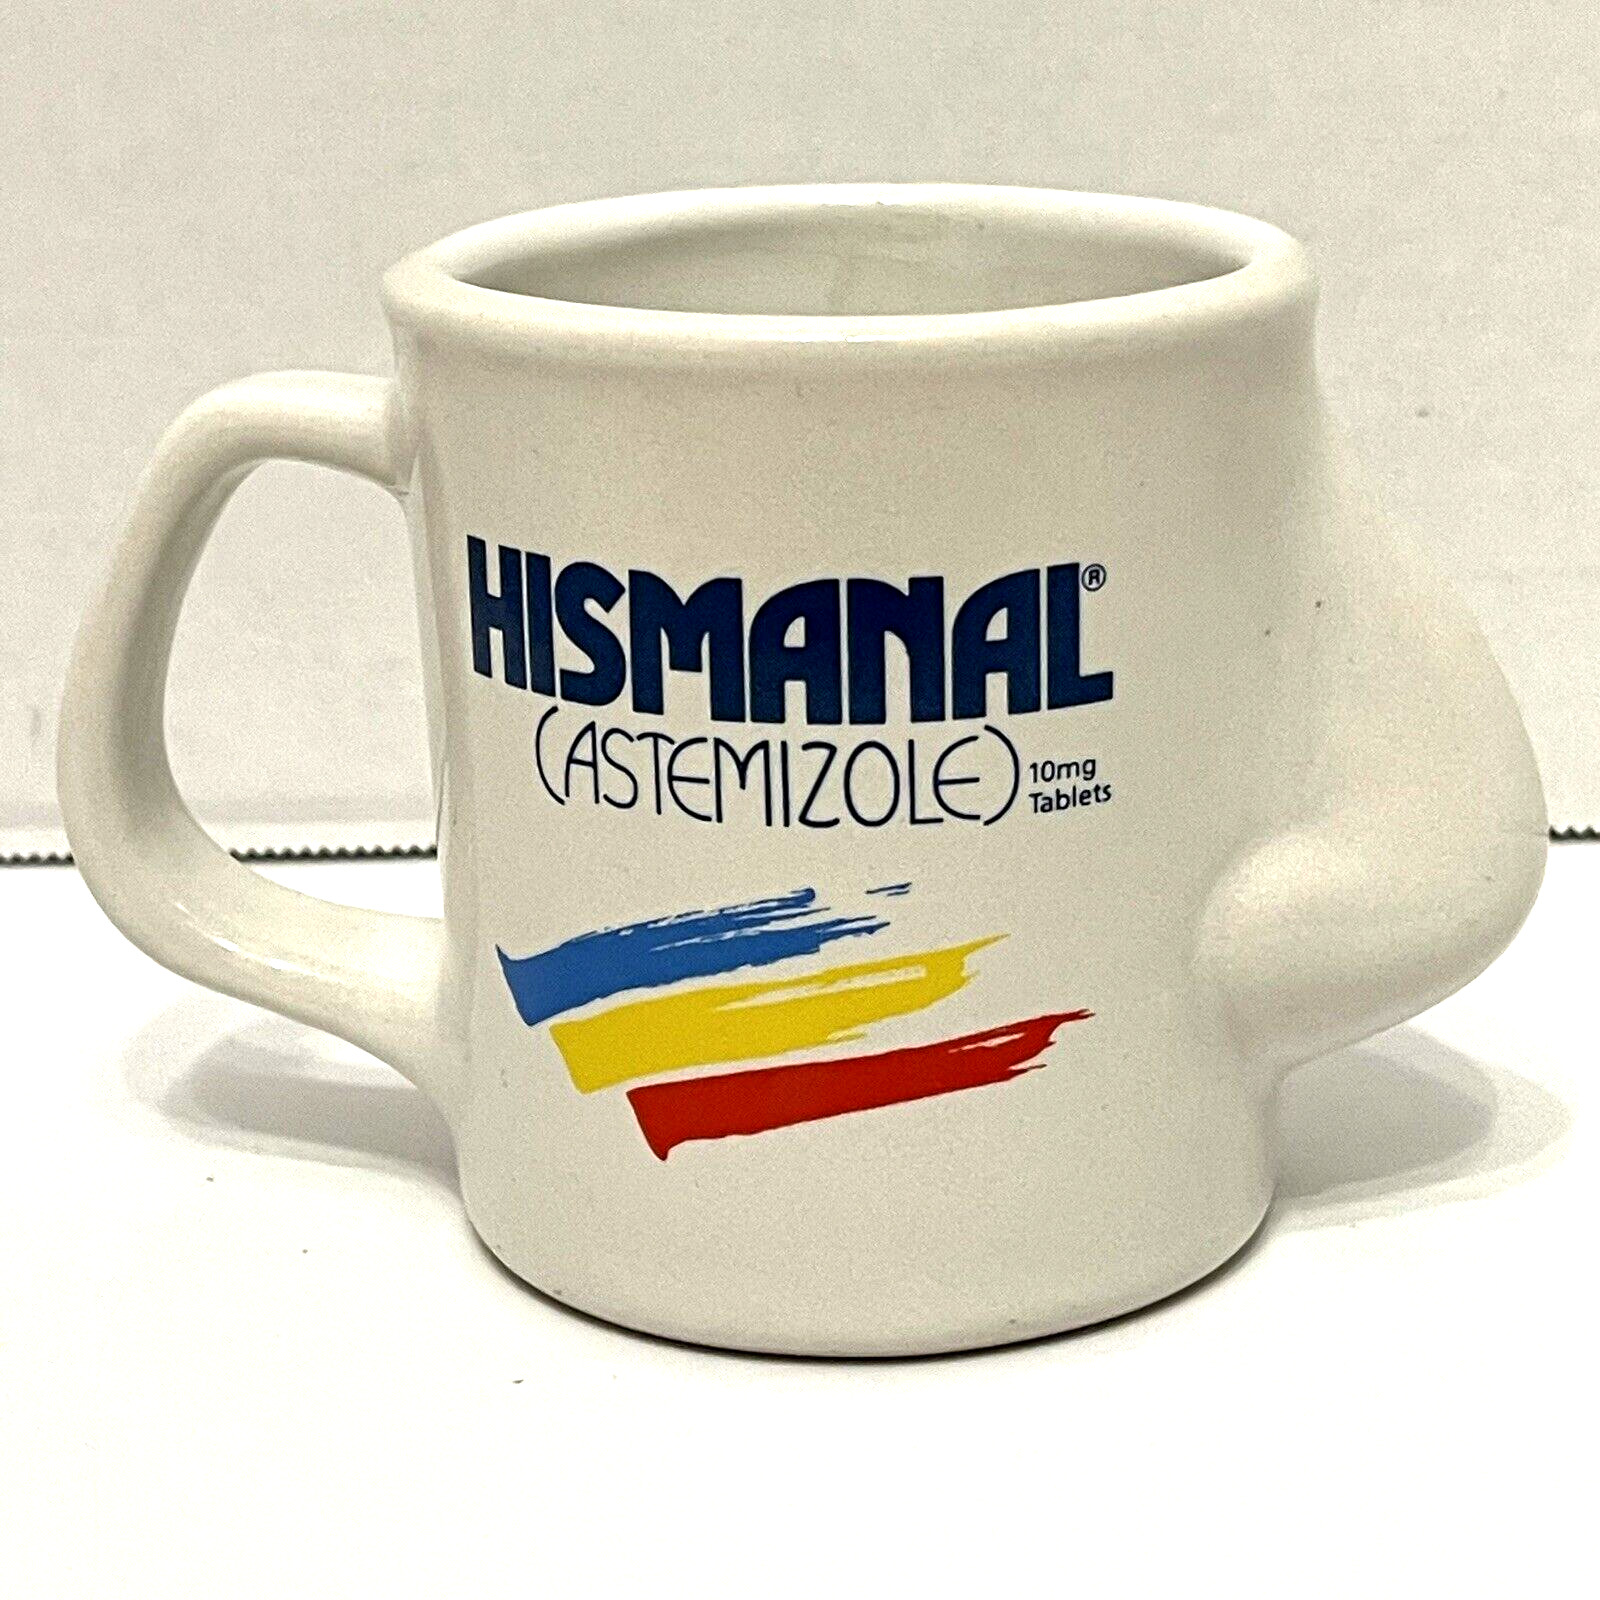 Hismanal 10mg Drug Rep 3D Nose Pharmaceutical Advertising Vintage Mug / Cup